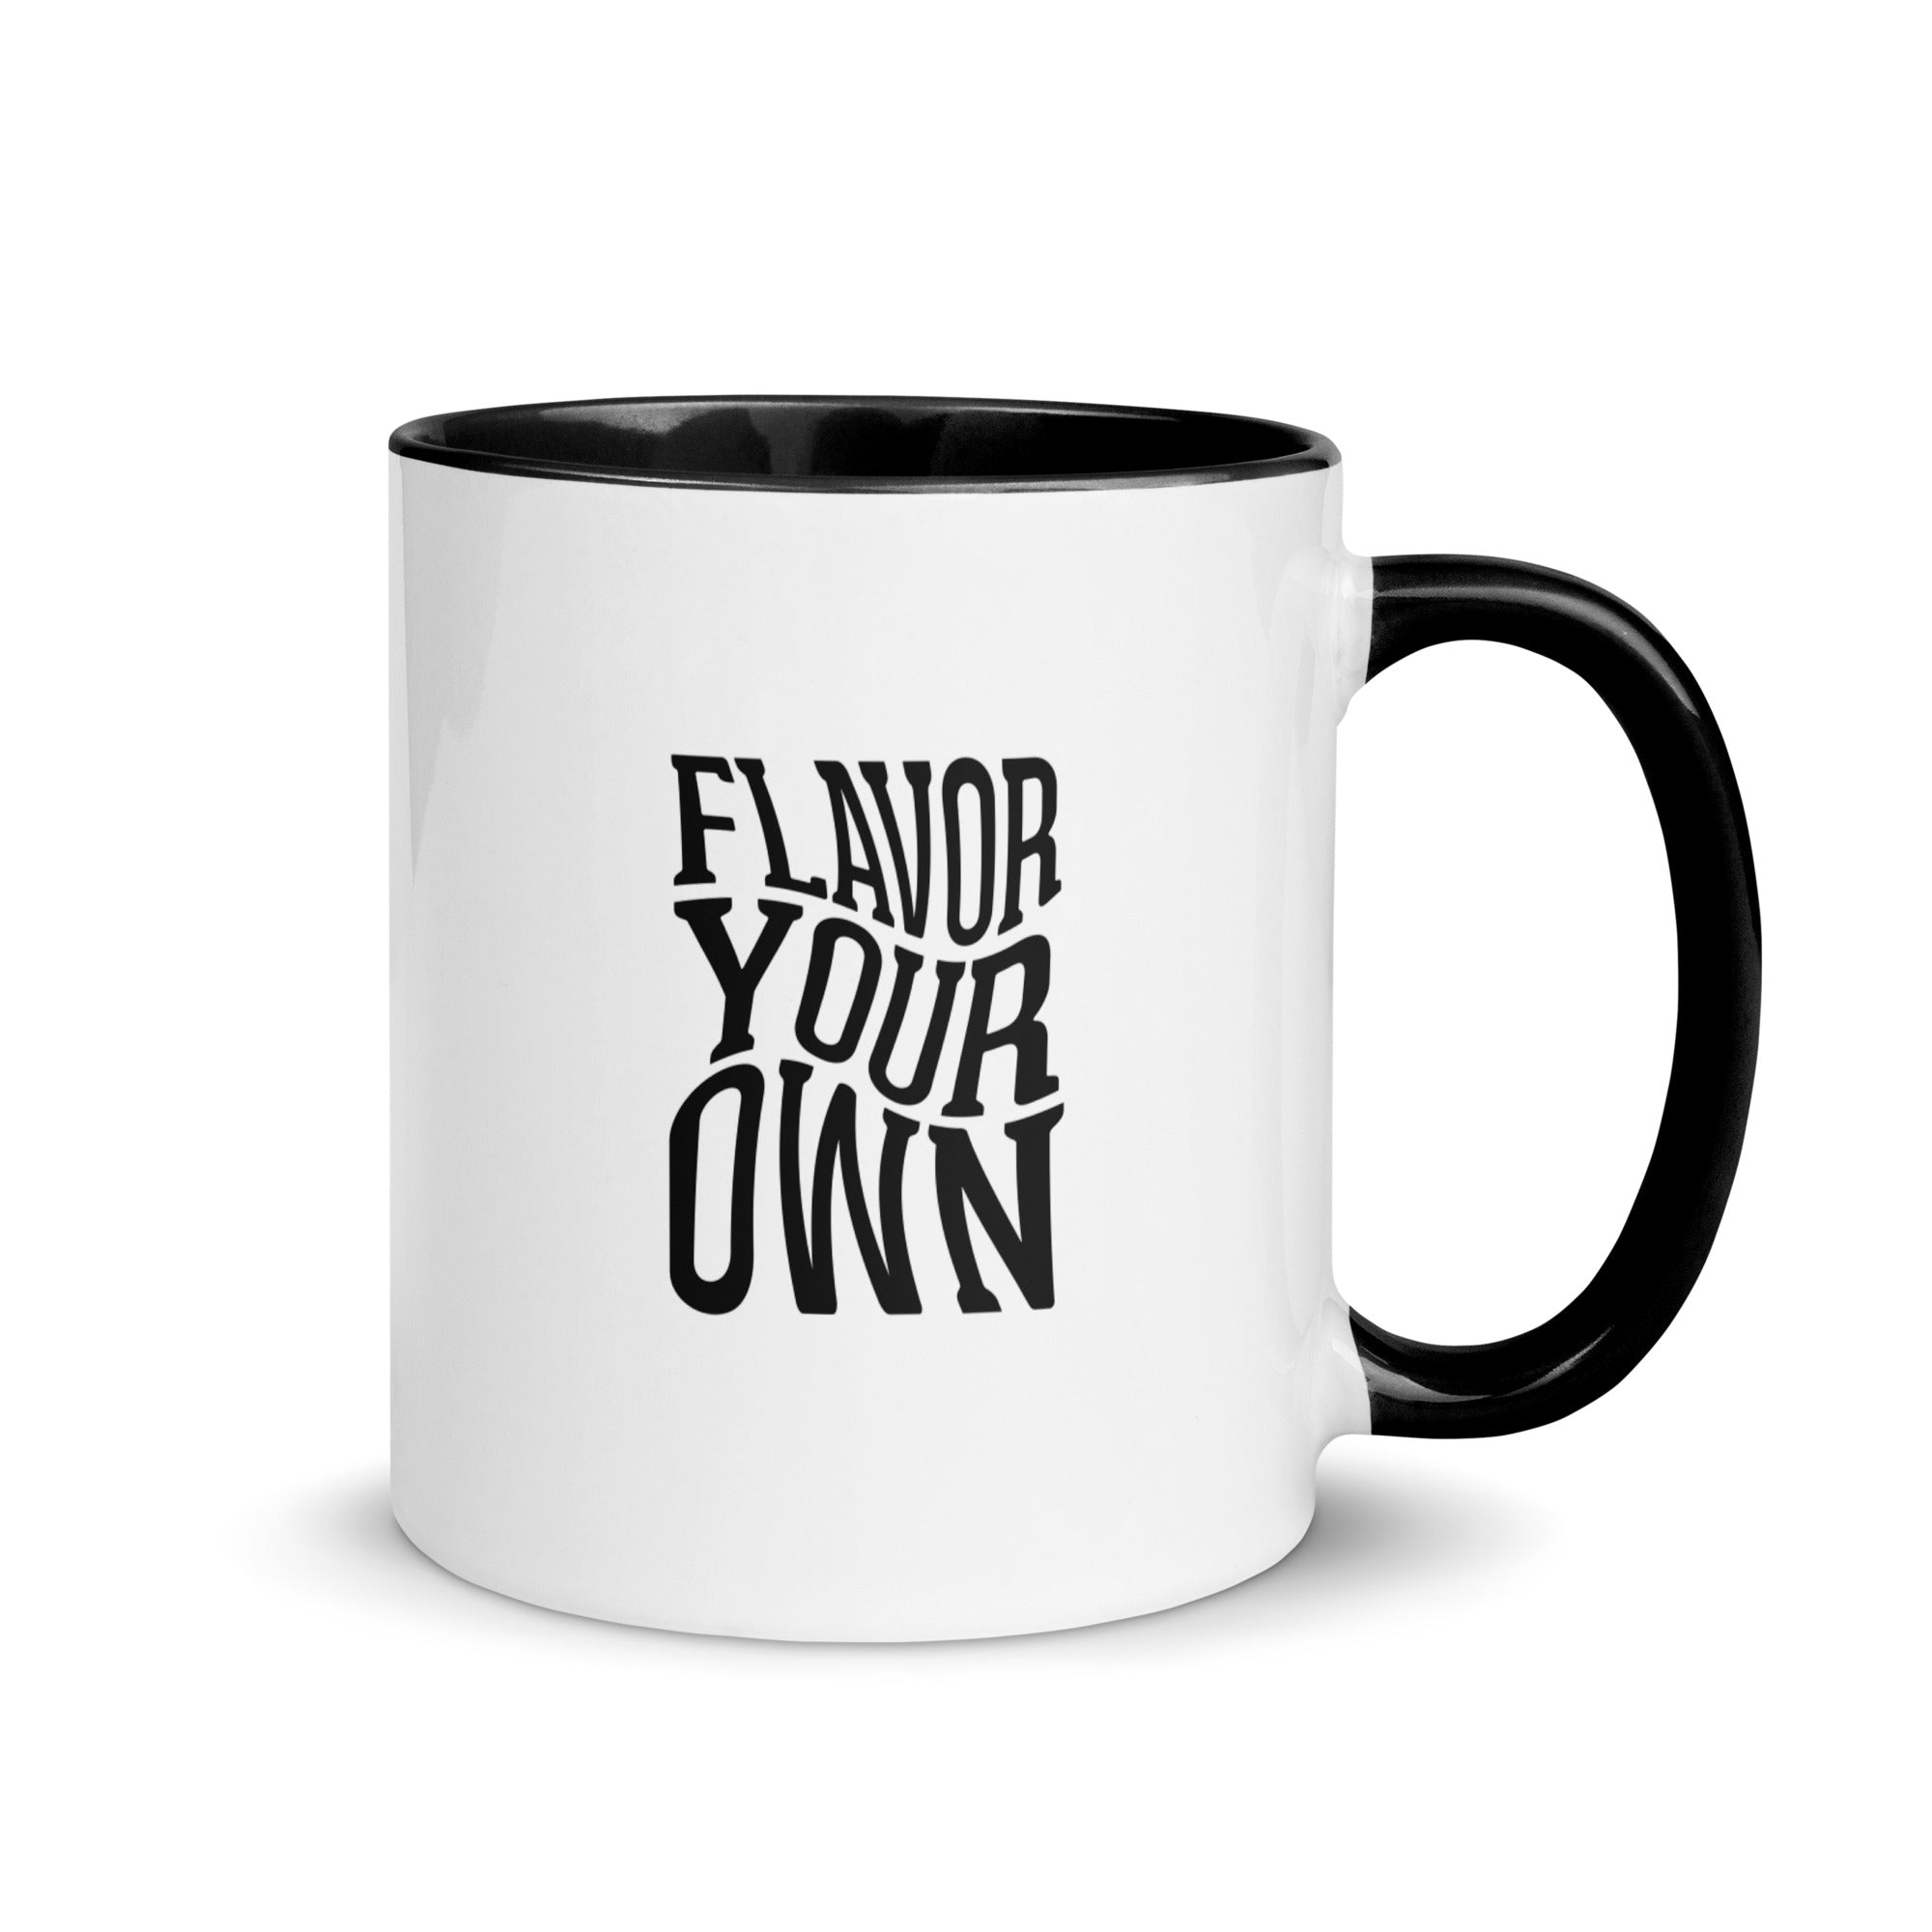 Flavor Your Own / Black & White Coffee Mug